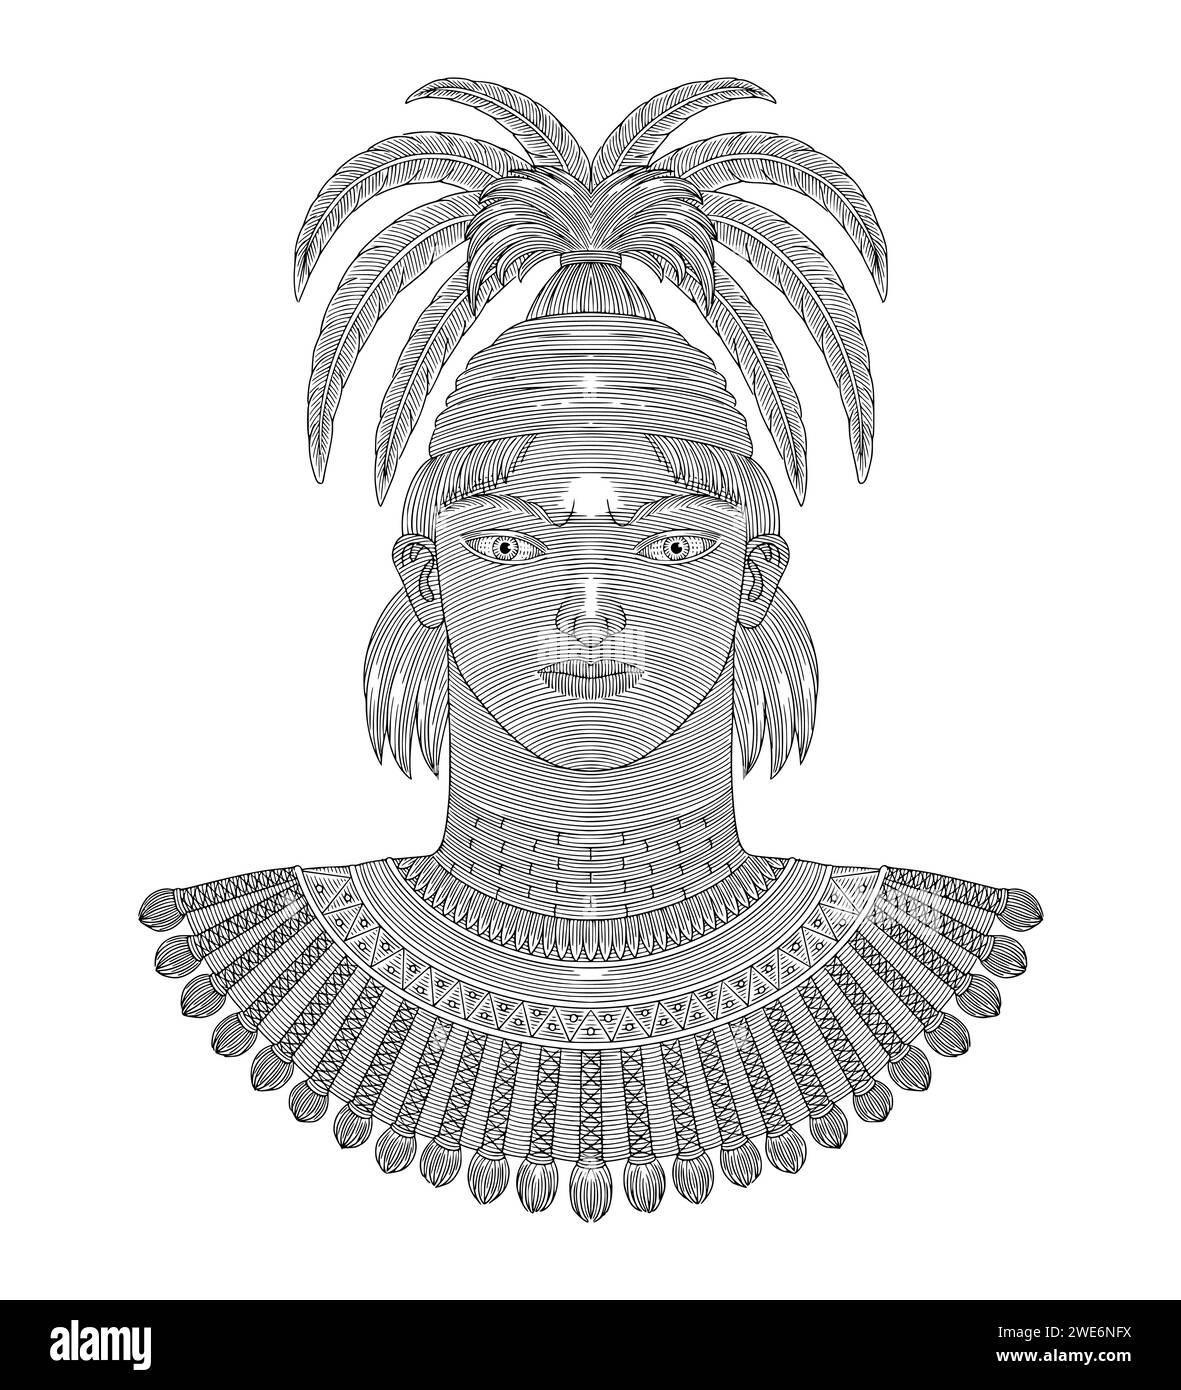 Ancient mayan warrior, vintage engraving drawing style illustration Stock Vector